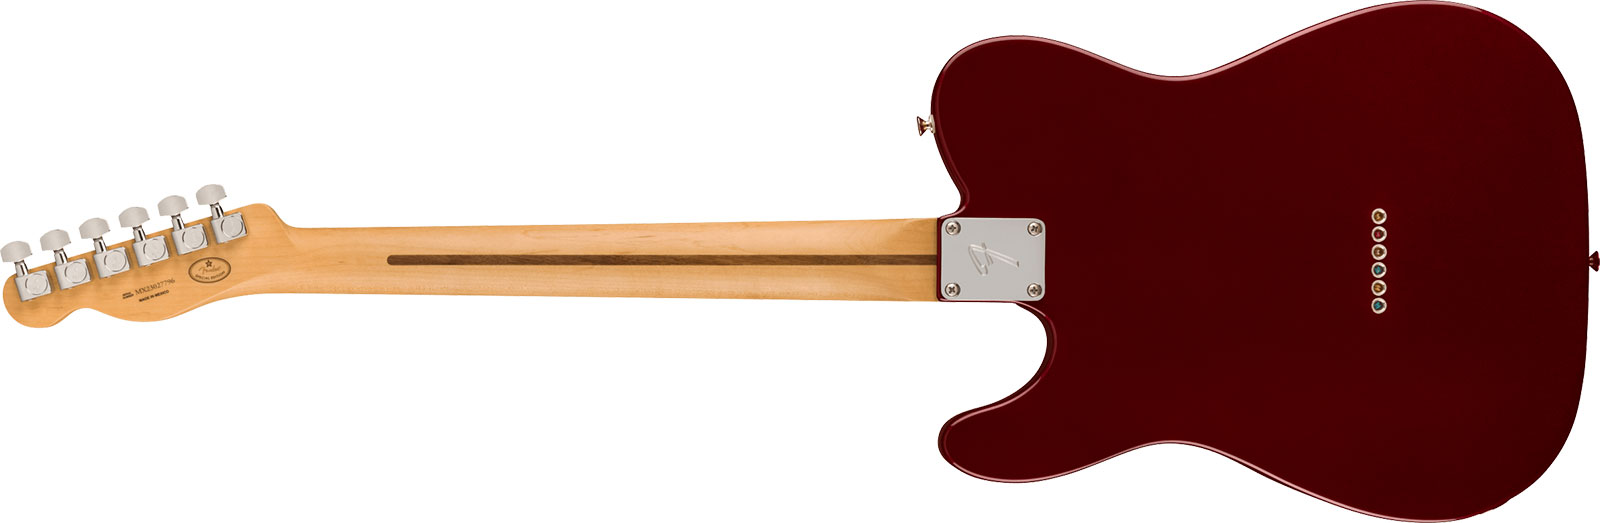 Fender Tele Player Ltd Mex 2s Pure Vintage Ht Eb - Oxblood - Tel shape electric guitar - Variation 1